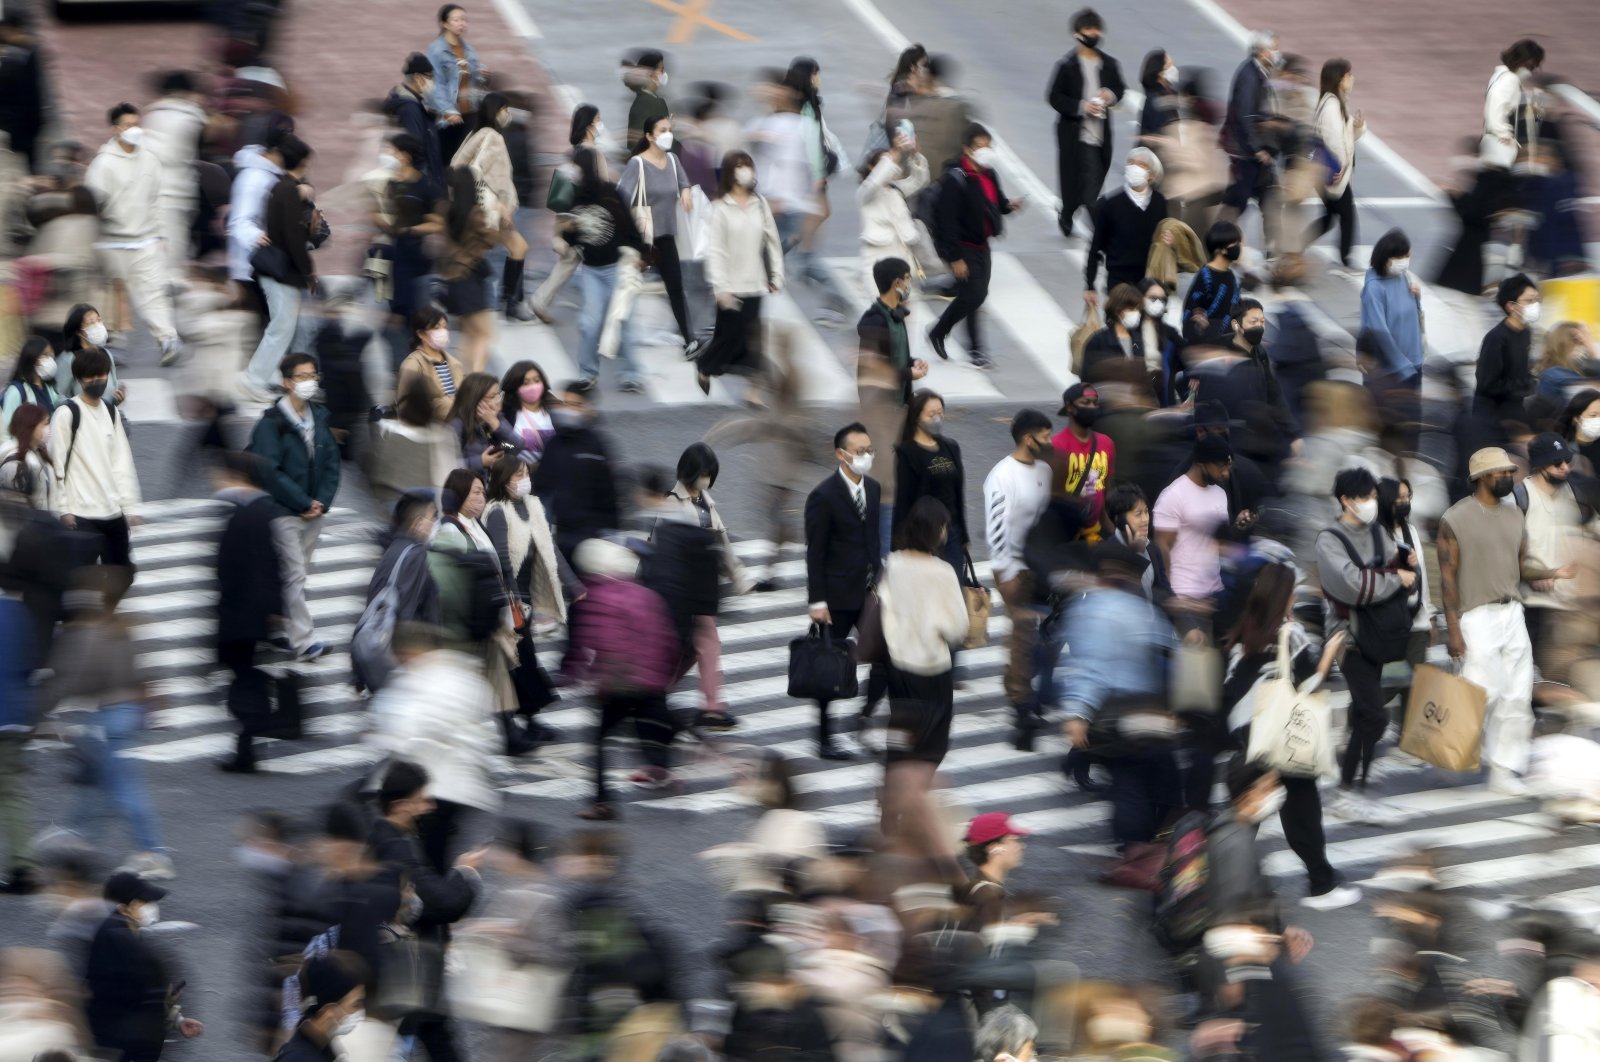 Pedestrians cross a street in the Shibuya district of Tokyo, Japan, Nov. 24, 2022. (EPA Photo)